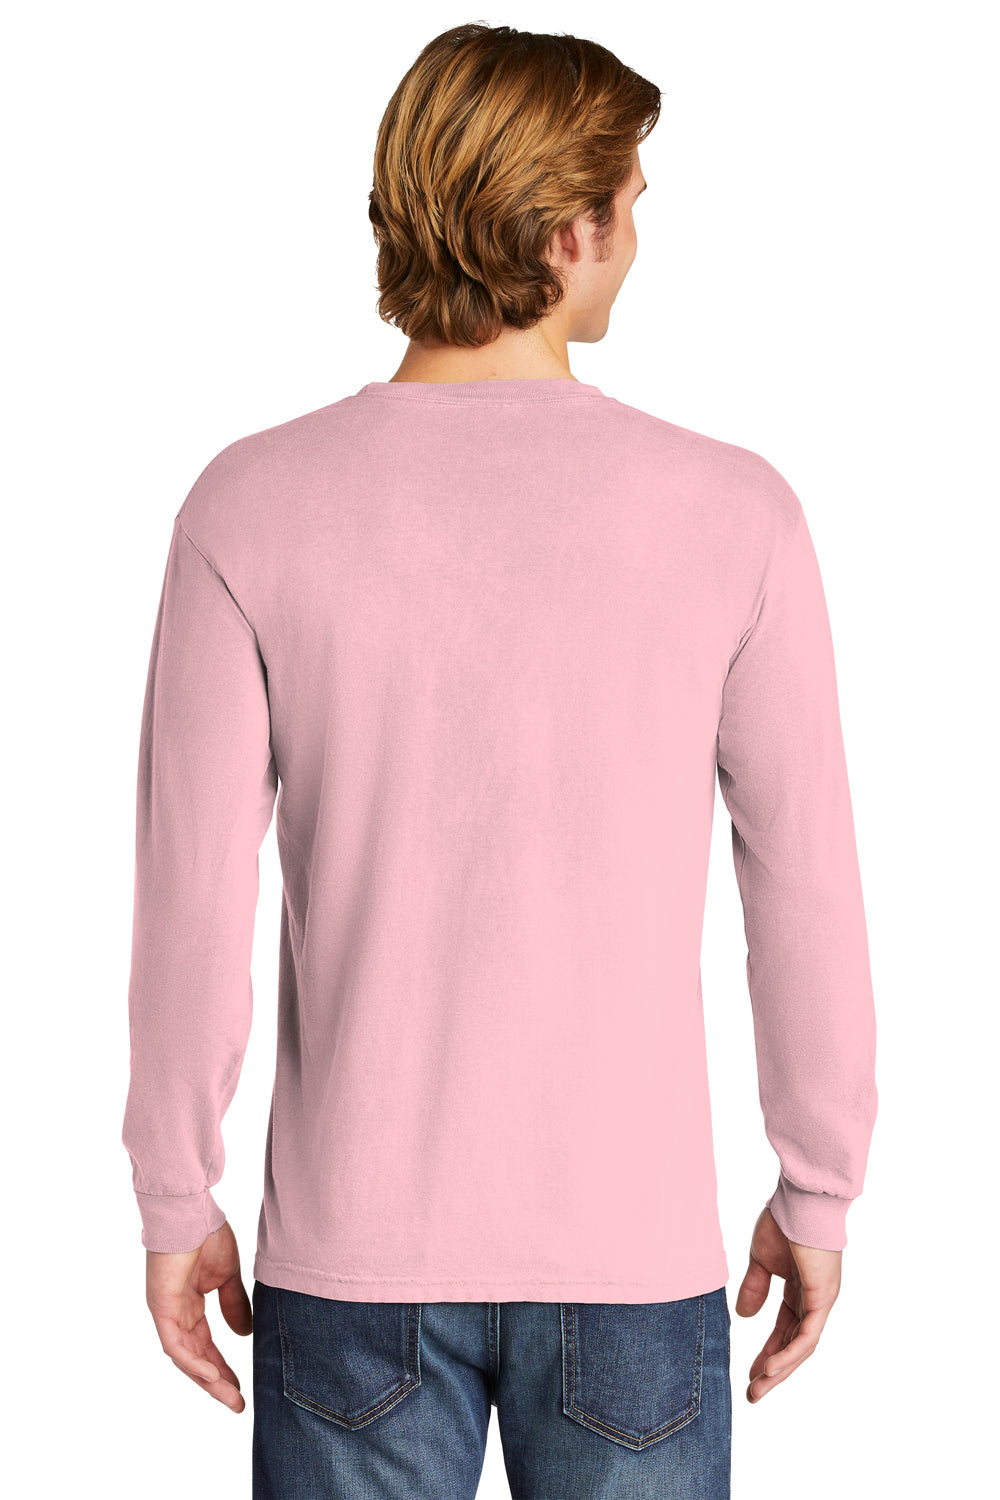 Comfort Colors 6014/C6014 Mens Long Sleeve Crewneck T-Shirt Blossom Pink Back